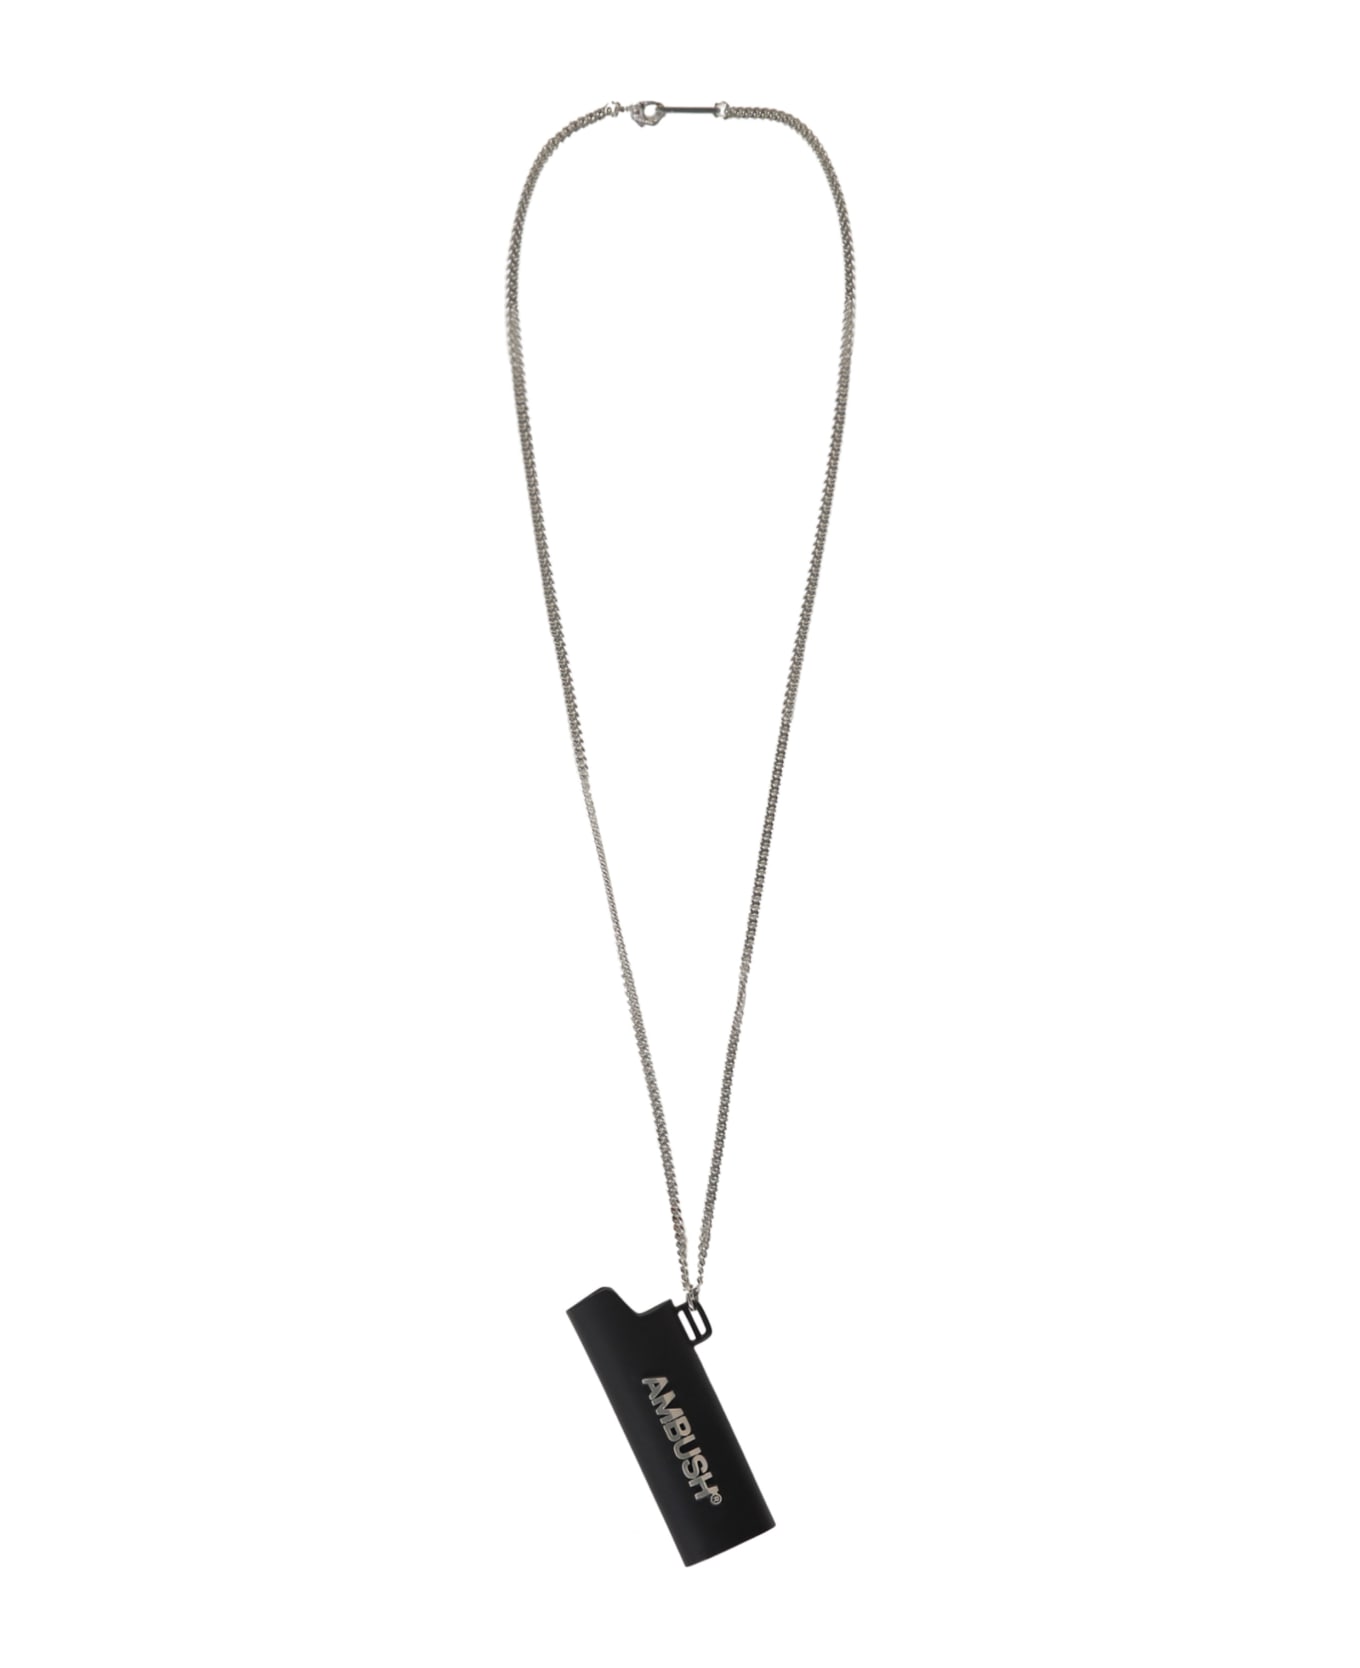 AMBUSH Lighter Case Necklace - black